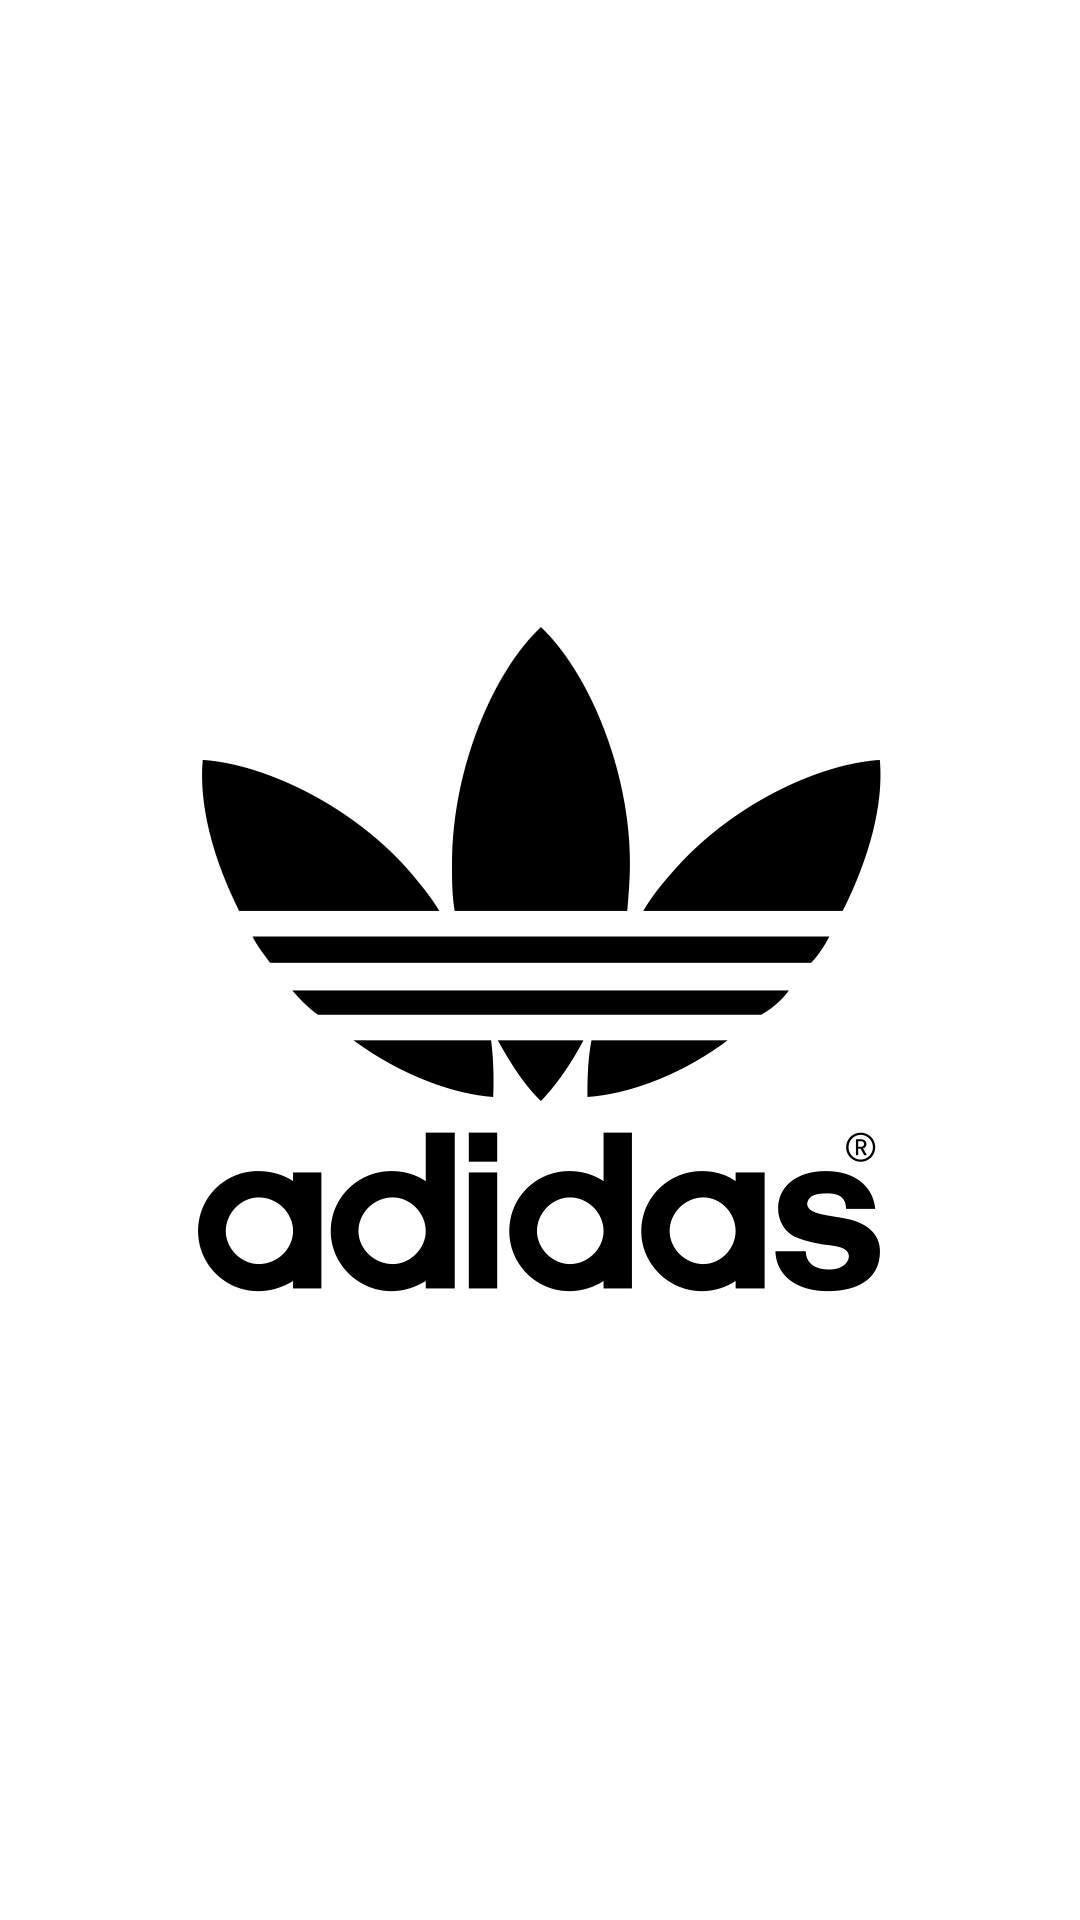 The Adidas Logo - freeshoessa on in 2019 | Nike | Adidas, Fashion, Outfits